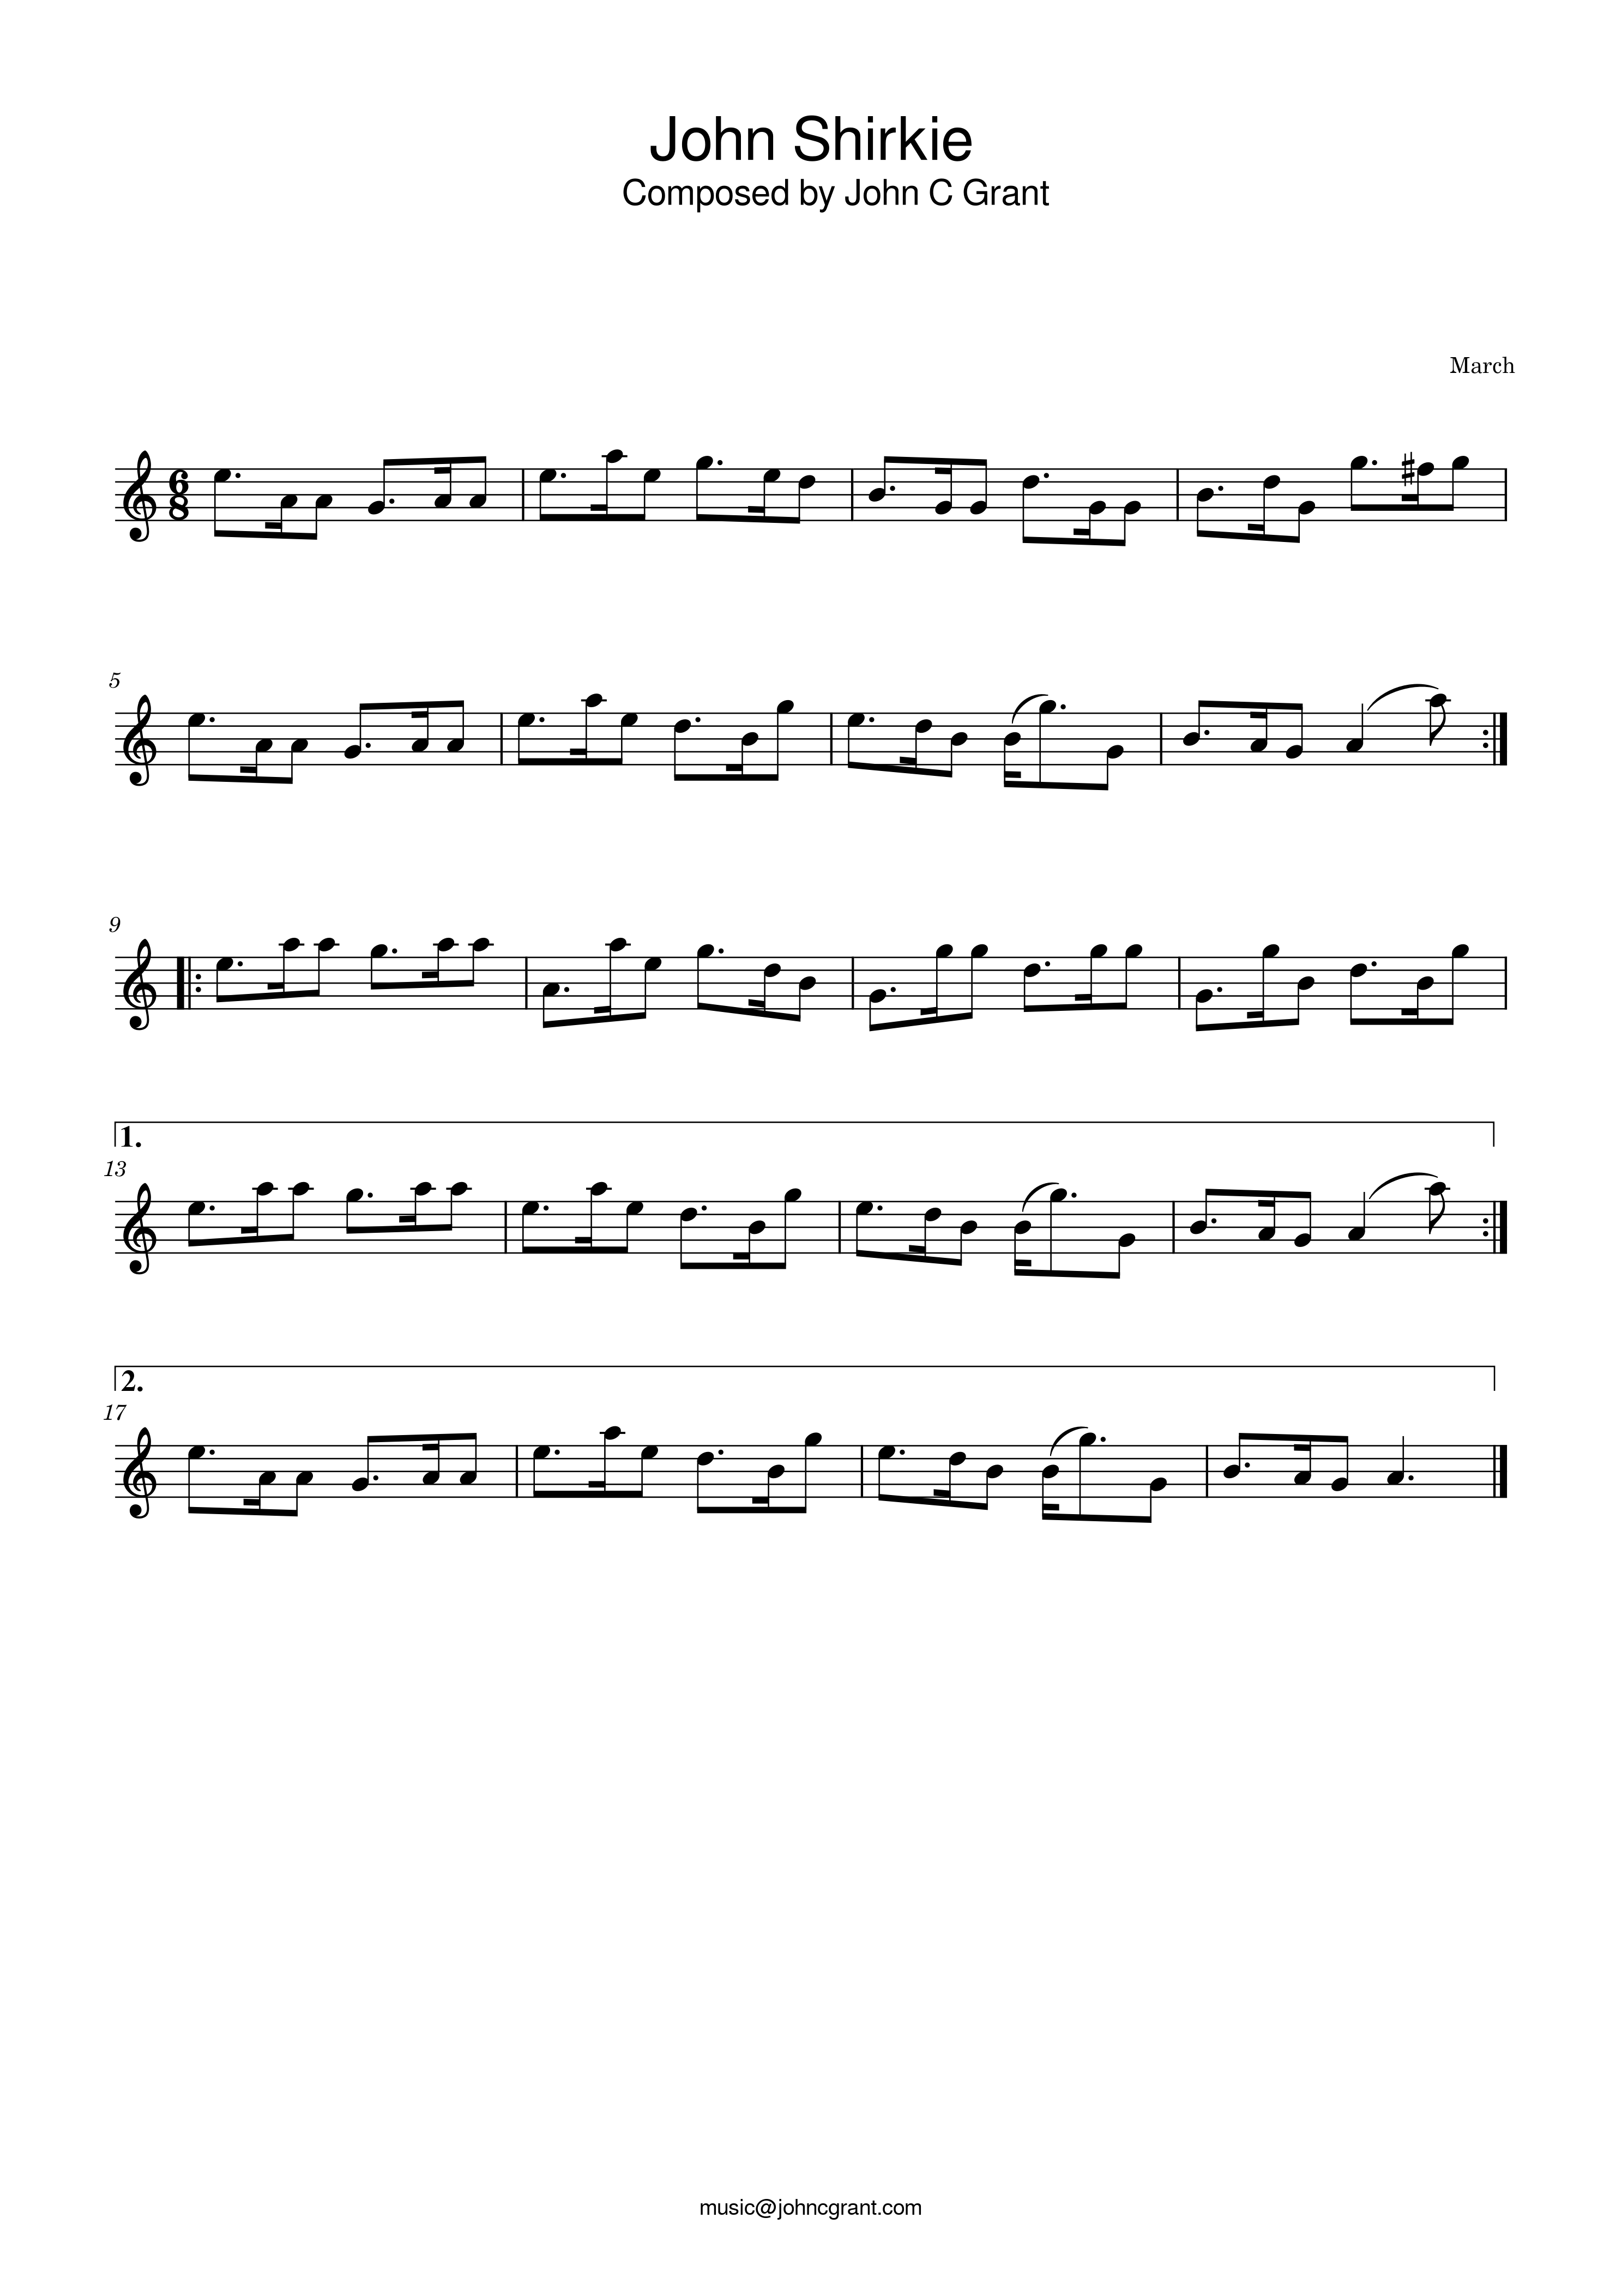 John Shirkie - Composed by John C Grant (https://johncgrant.com). Traditional composer from Kilmarnock, Ayrshire, Scotland.